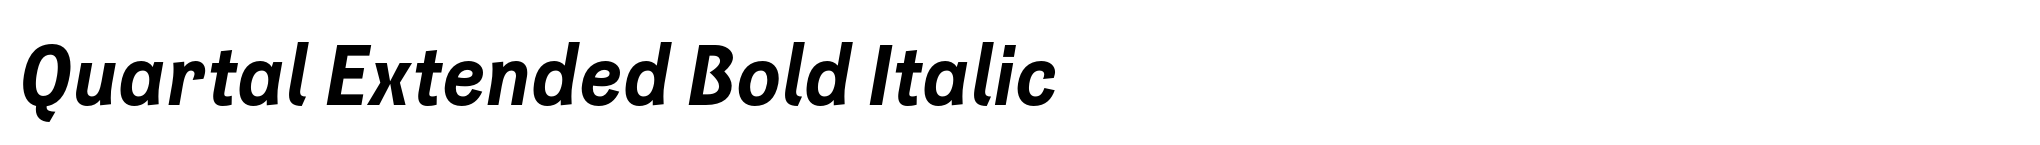 Quartal Extended Bold Italic image